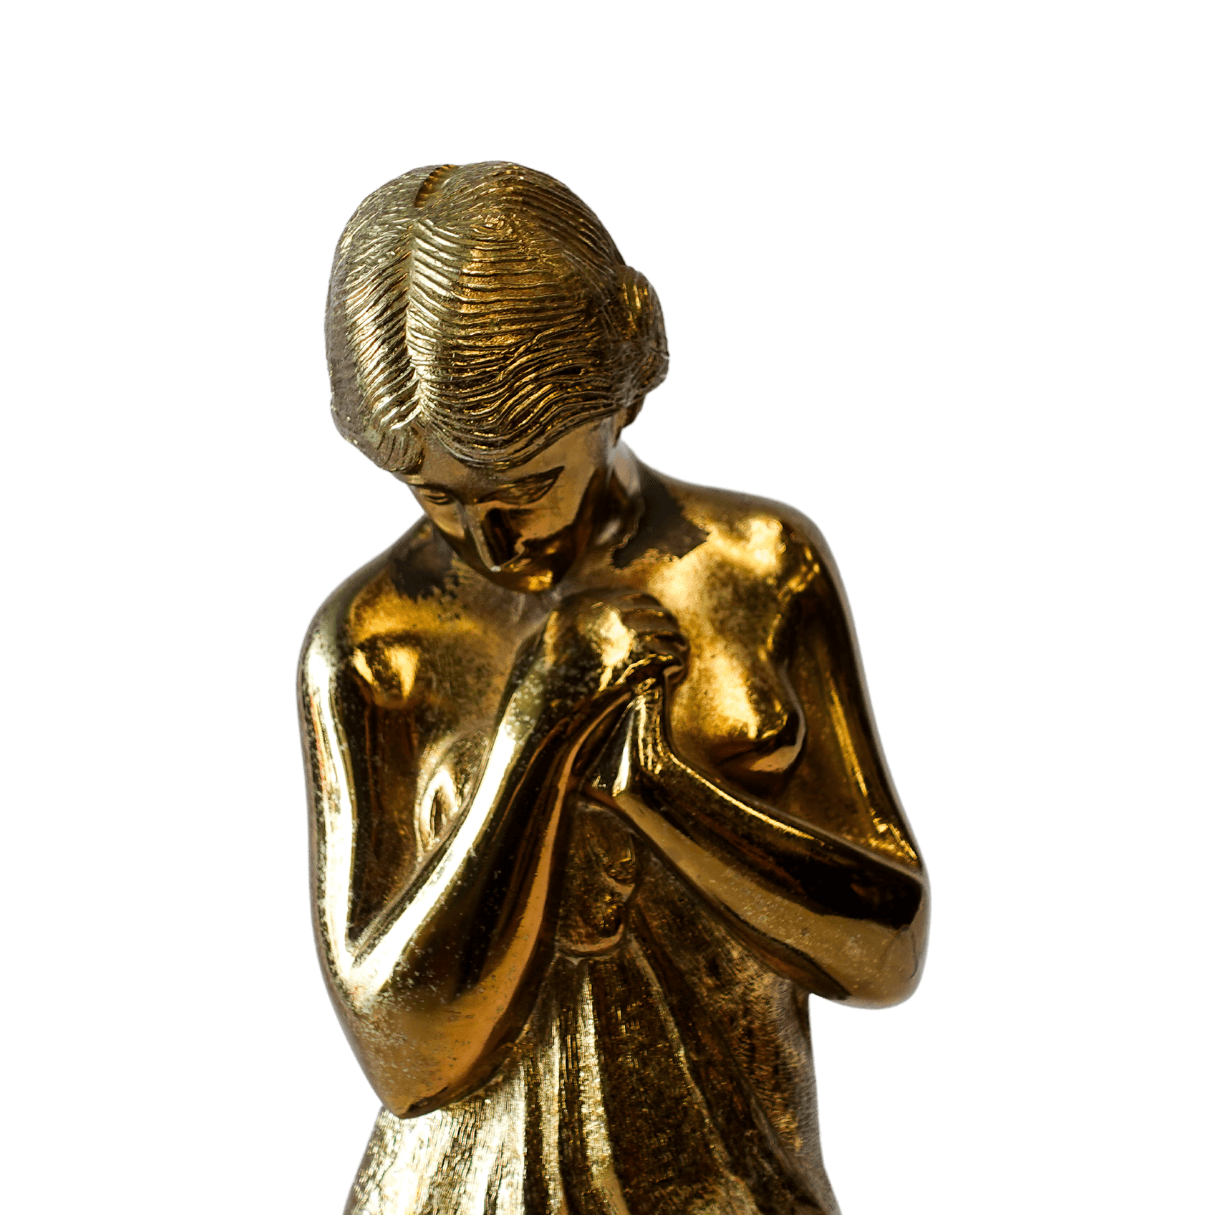 Escultura Antiga estilo Art nouveau Golden Woman